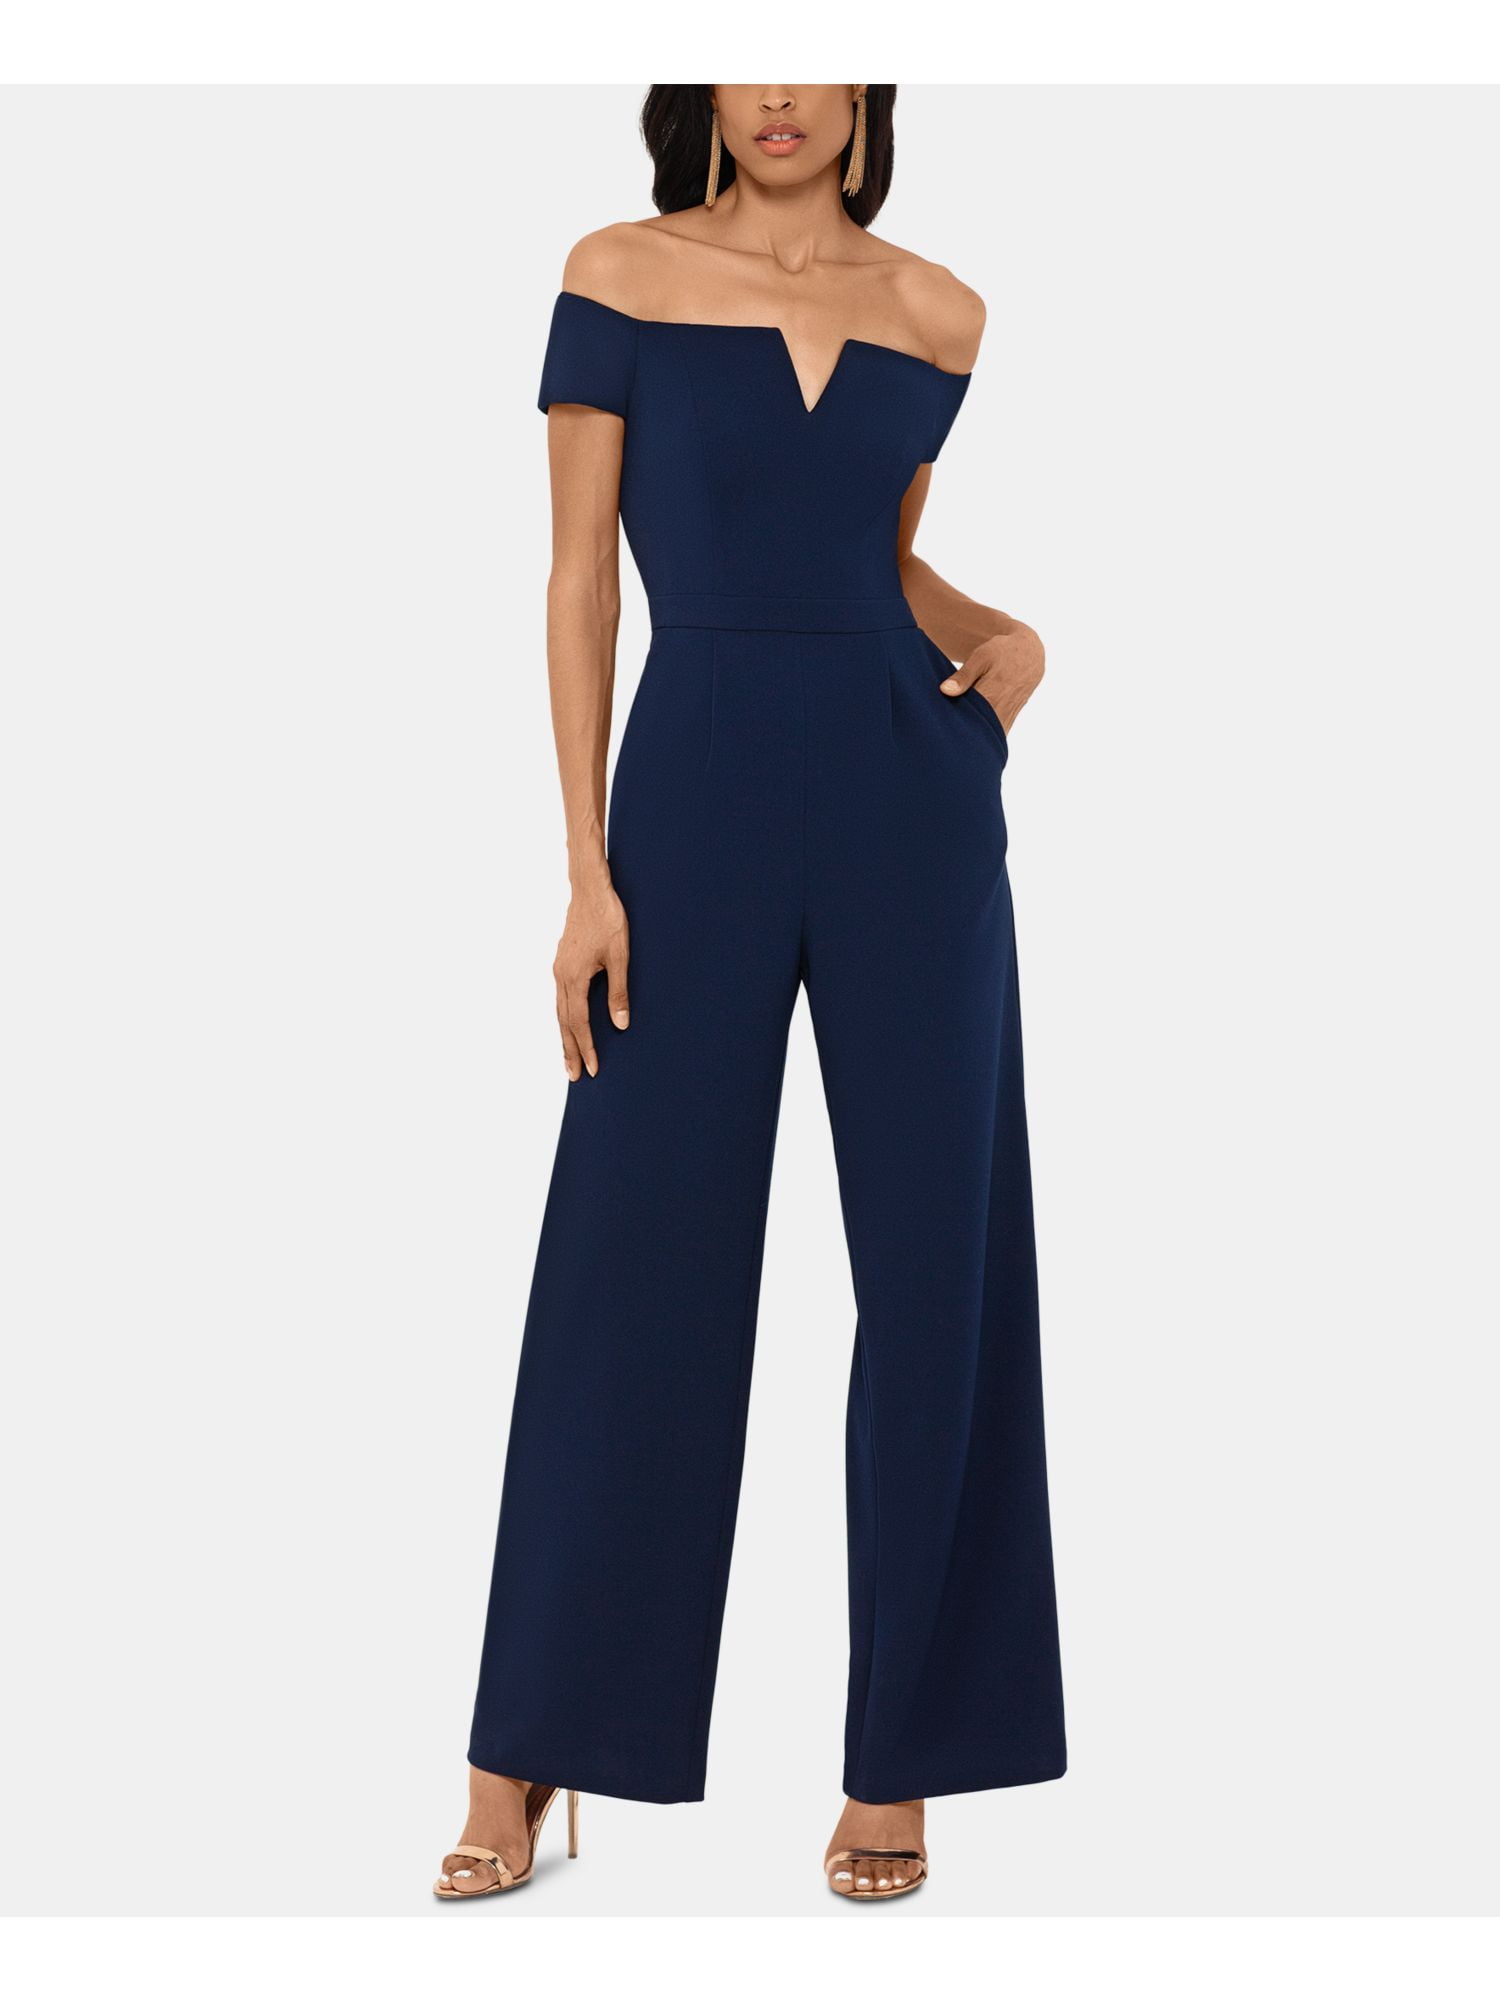 Navy blue Jumpsuit formal | Dresses Images 2022